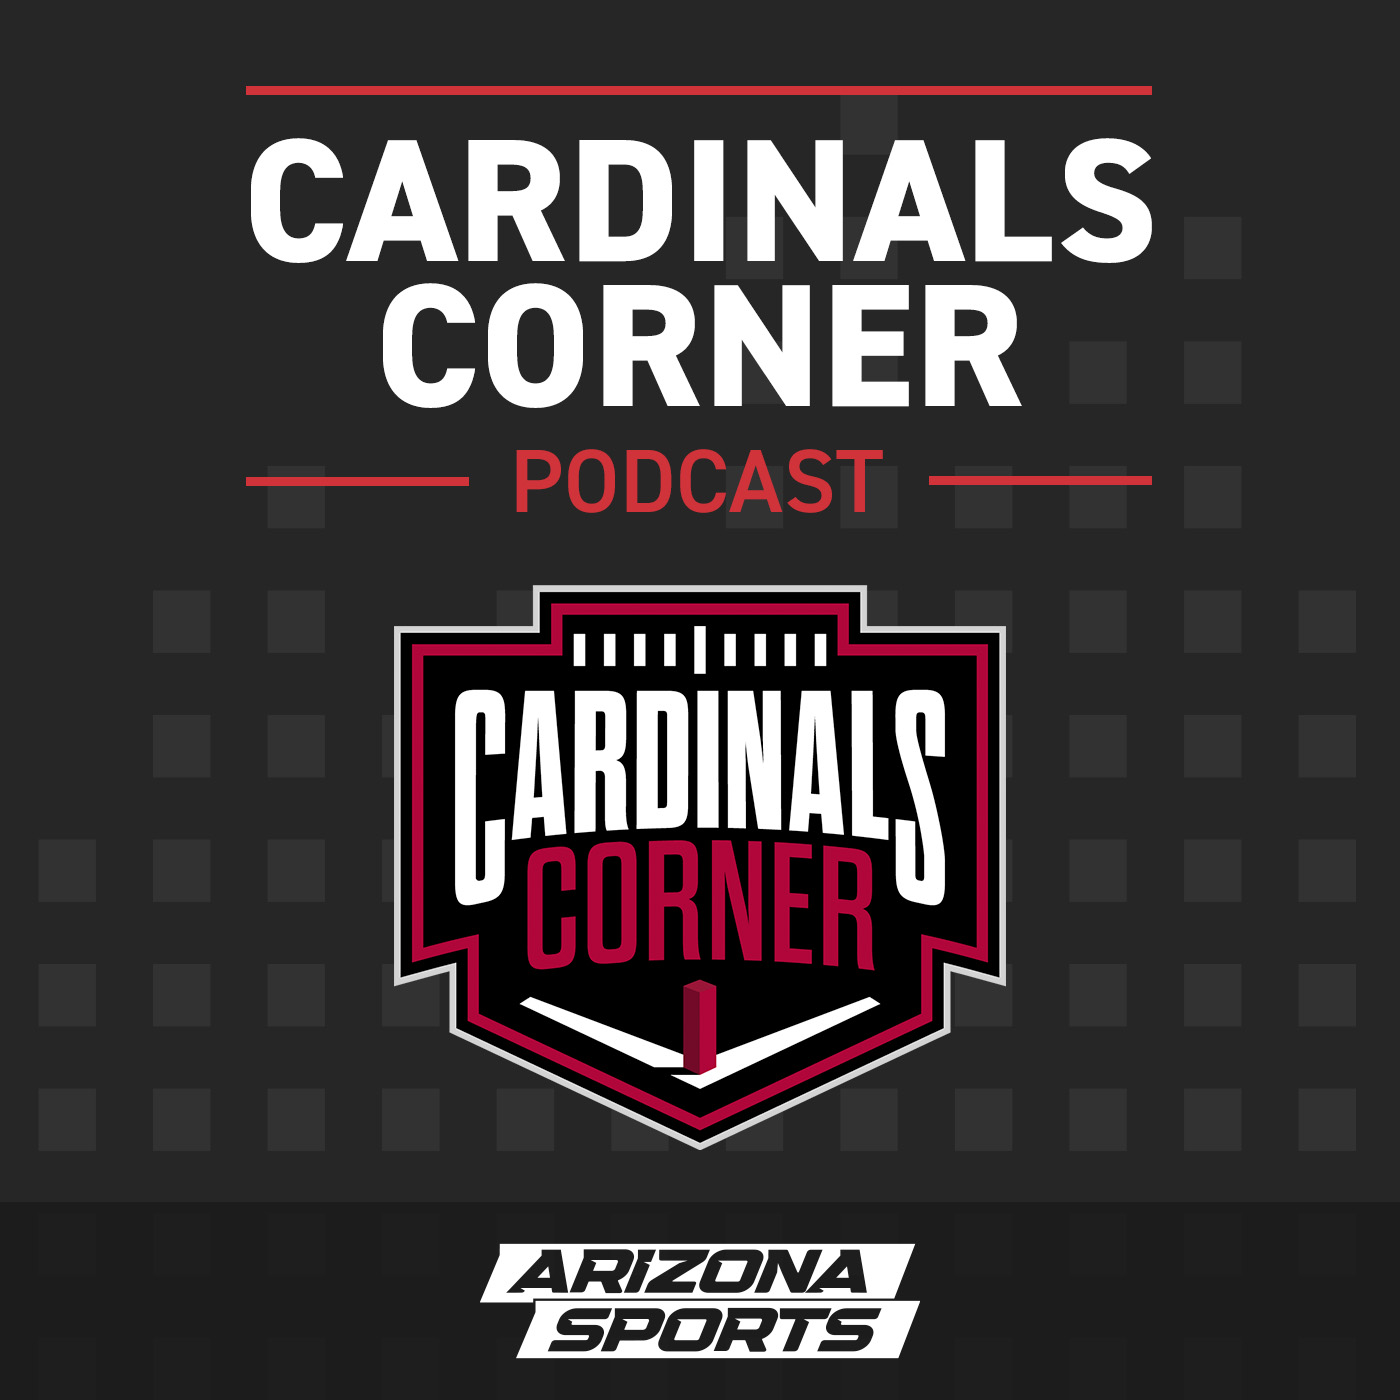 Cardinals Corner takes over Arizona Sports LIVE - July 3